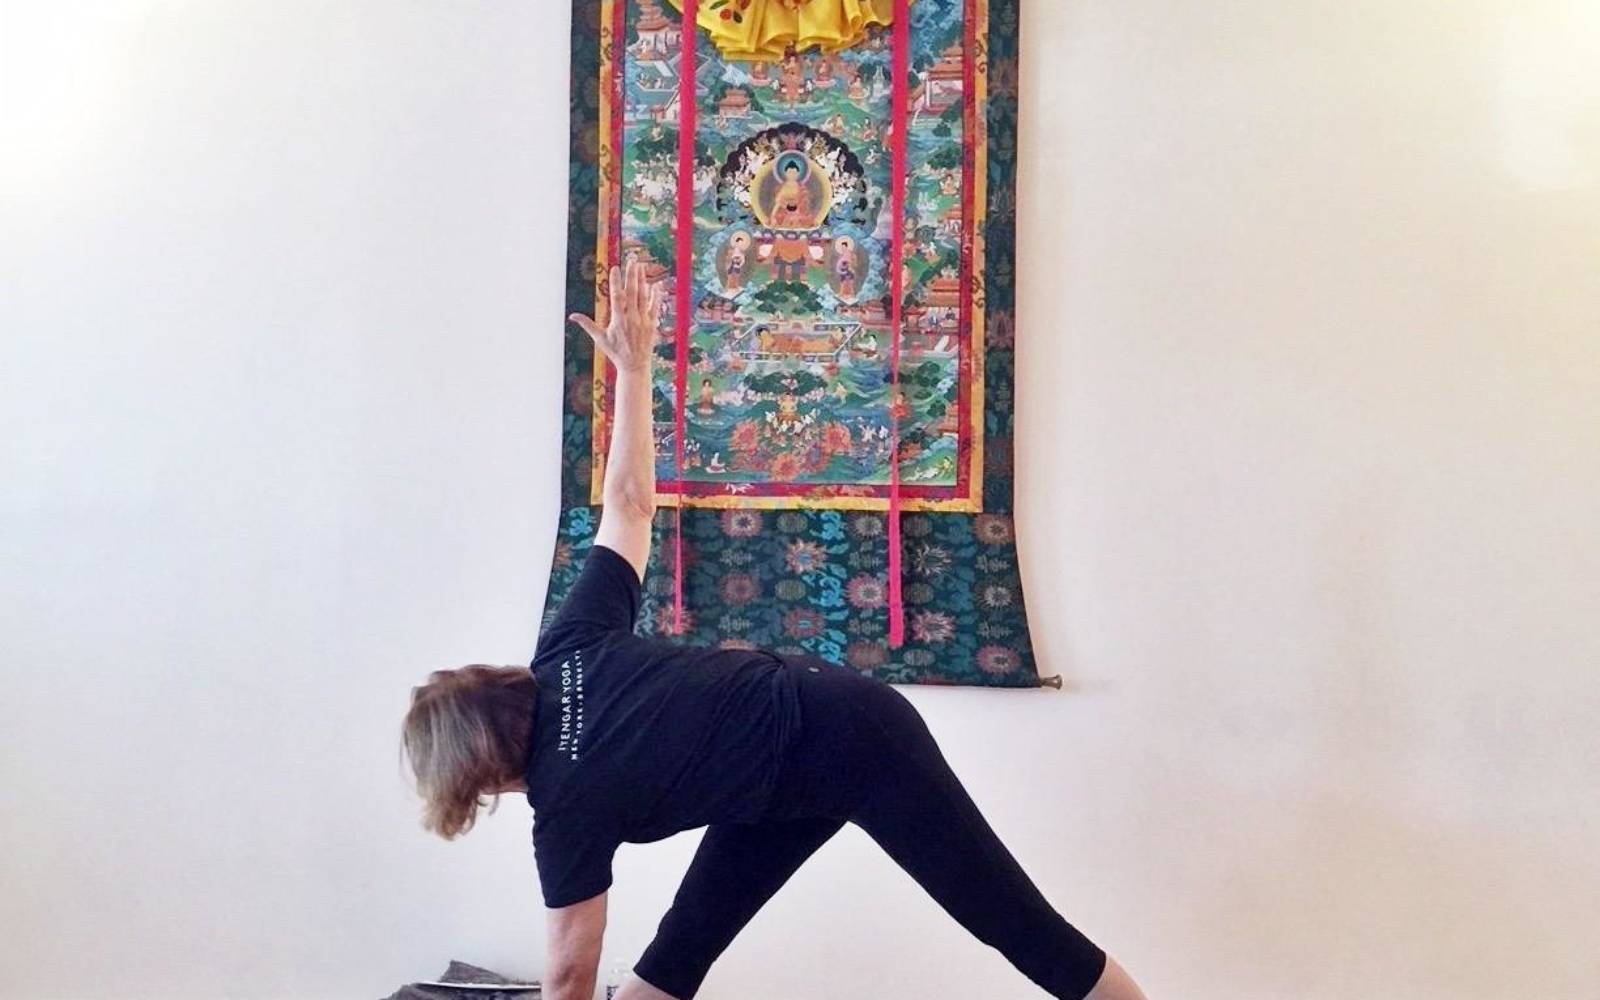 Studio image of: Susquehanna Yoga and Meditation